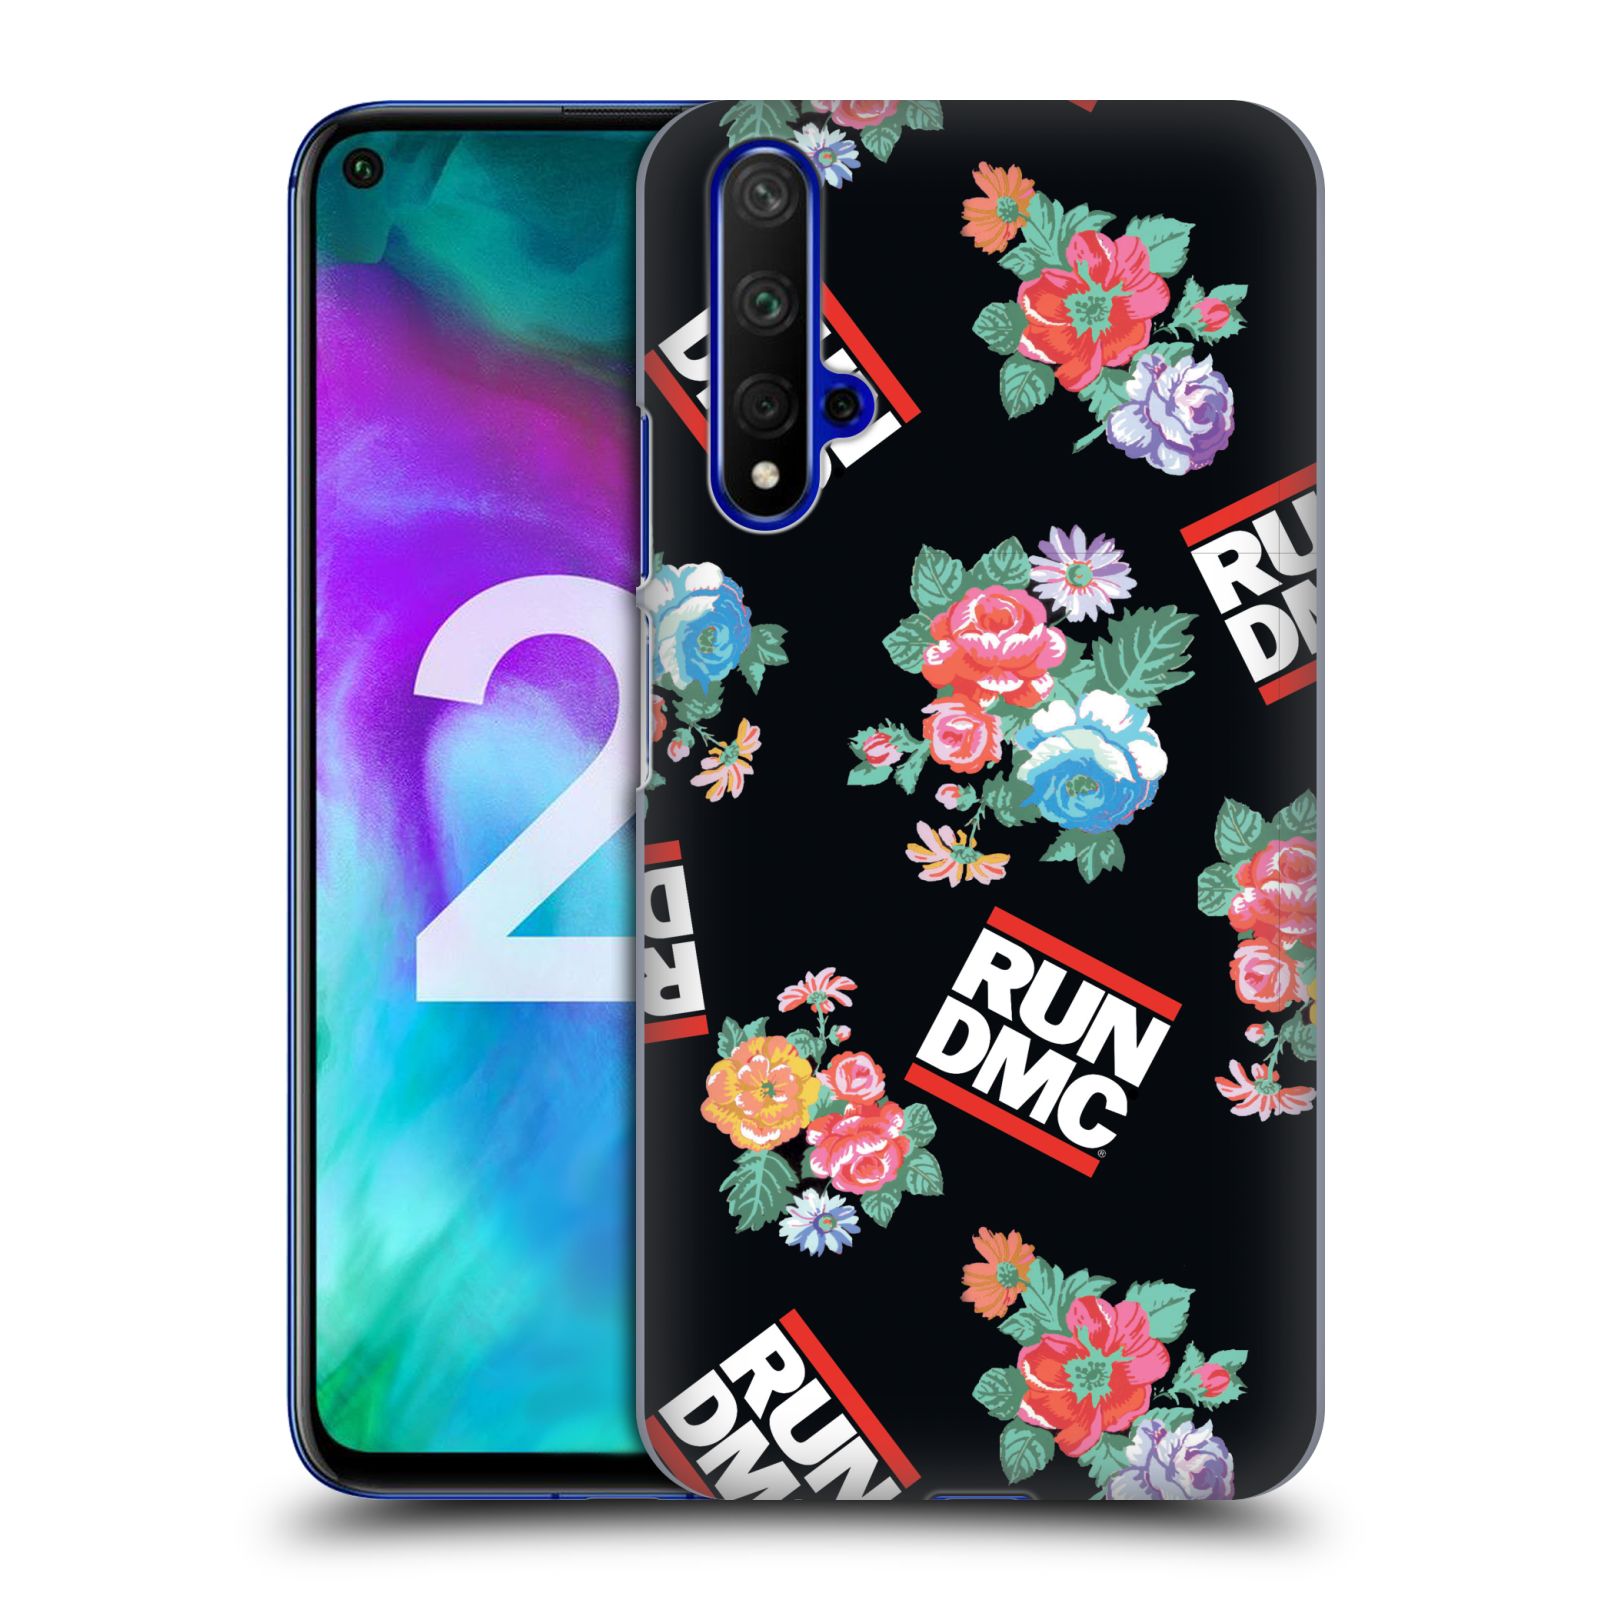 Pouzdro na mobil Honor 20 - HEAD CASE - rapová kapela Run DMC květiny černé pozadí